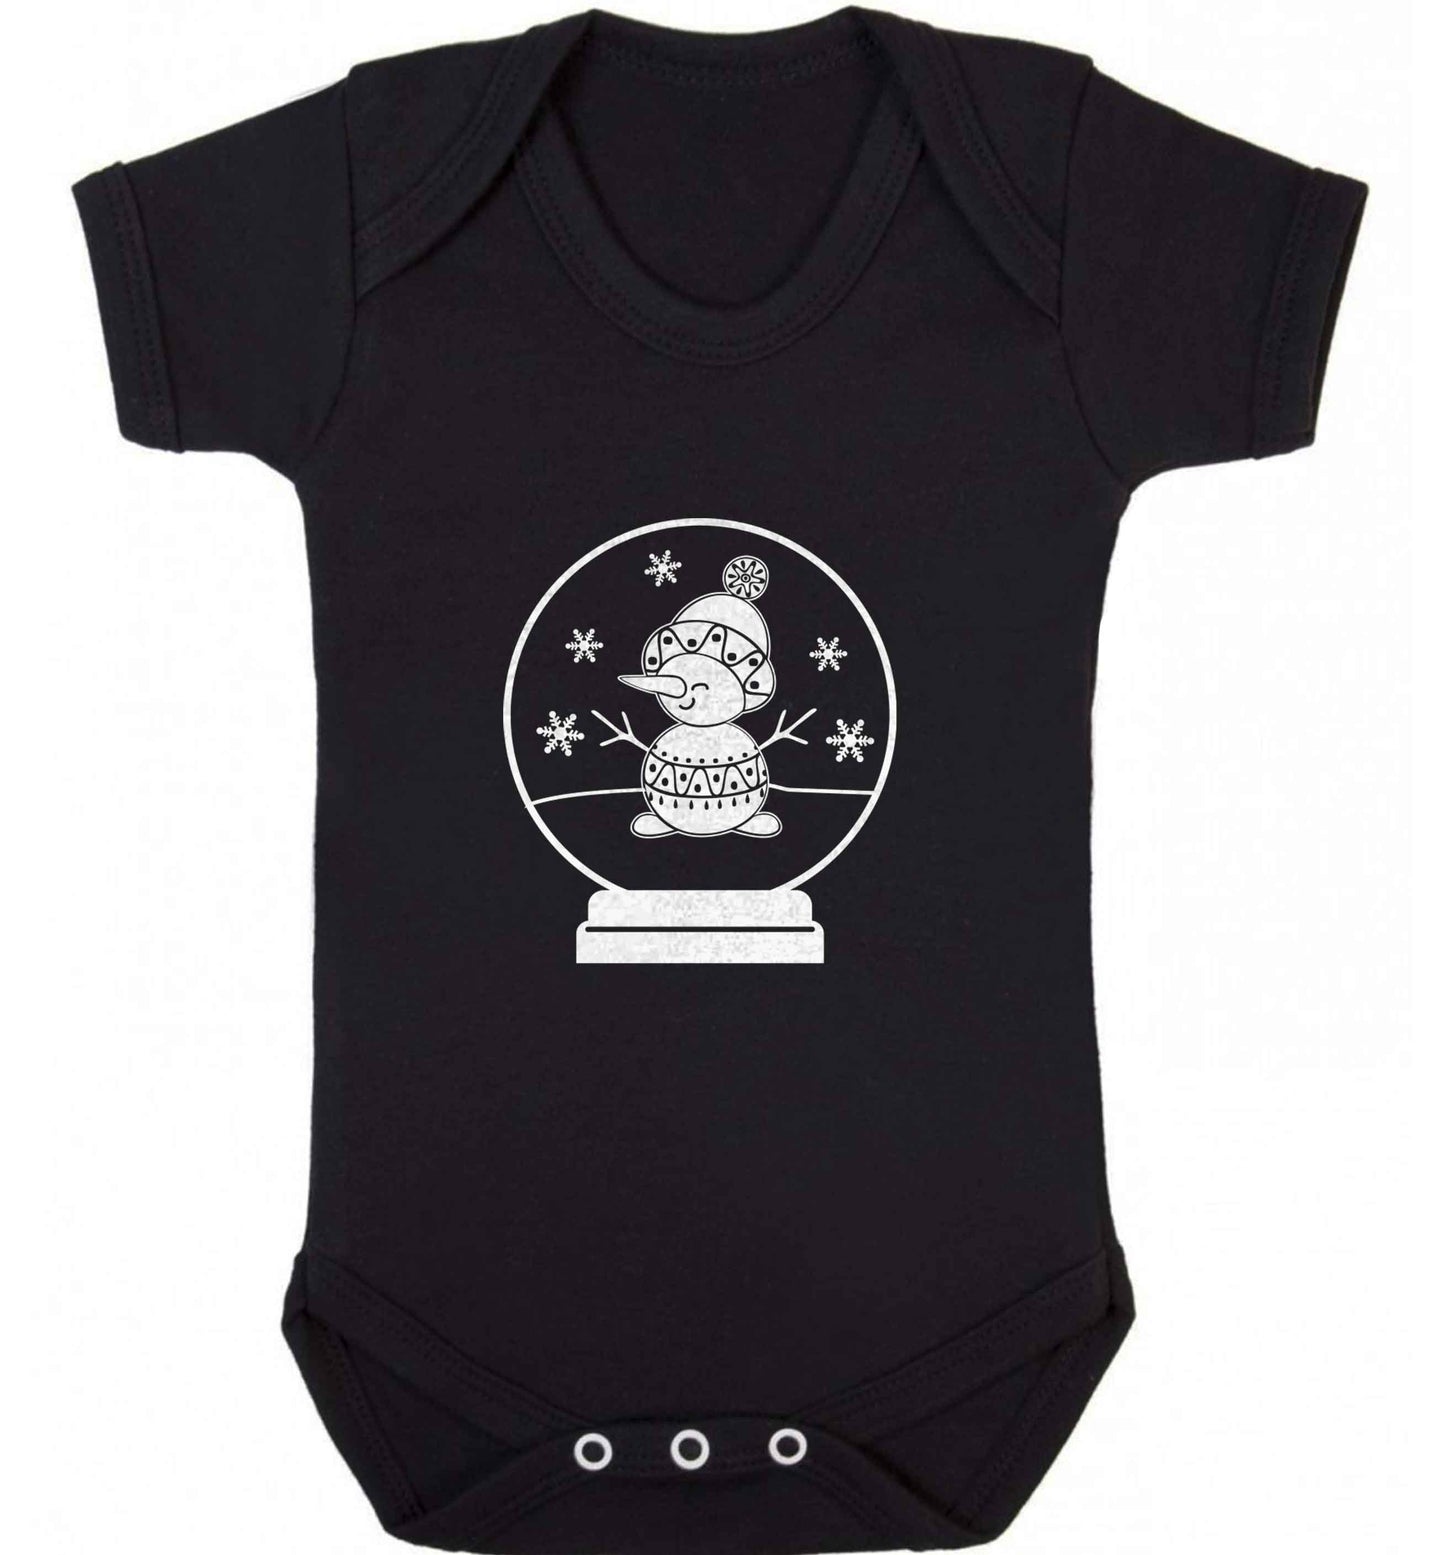 Snowman Snowglobe baby vest black 18-24 months